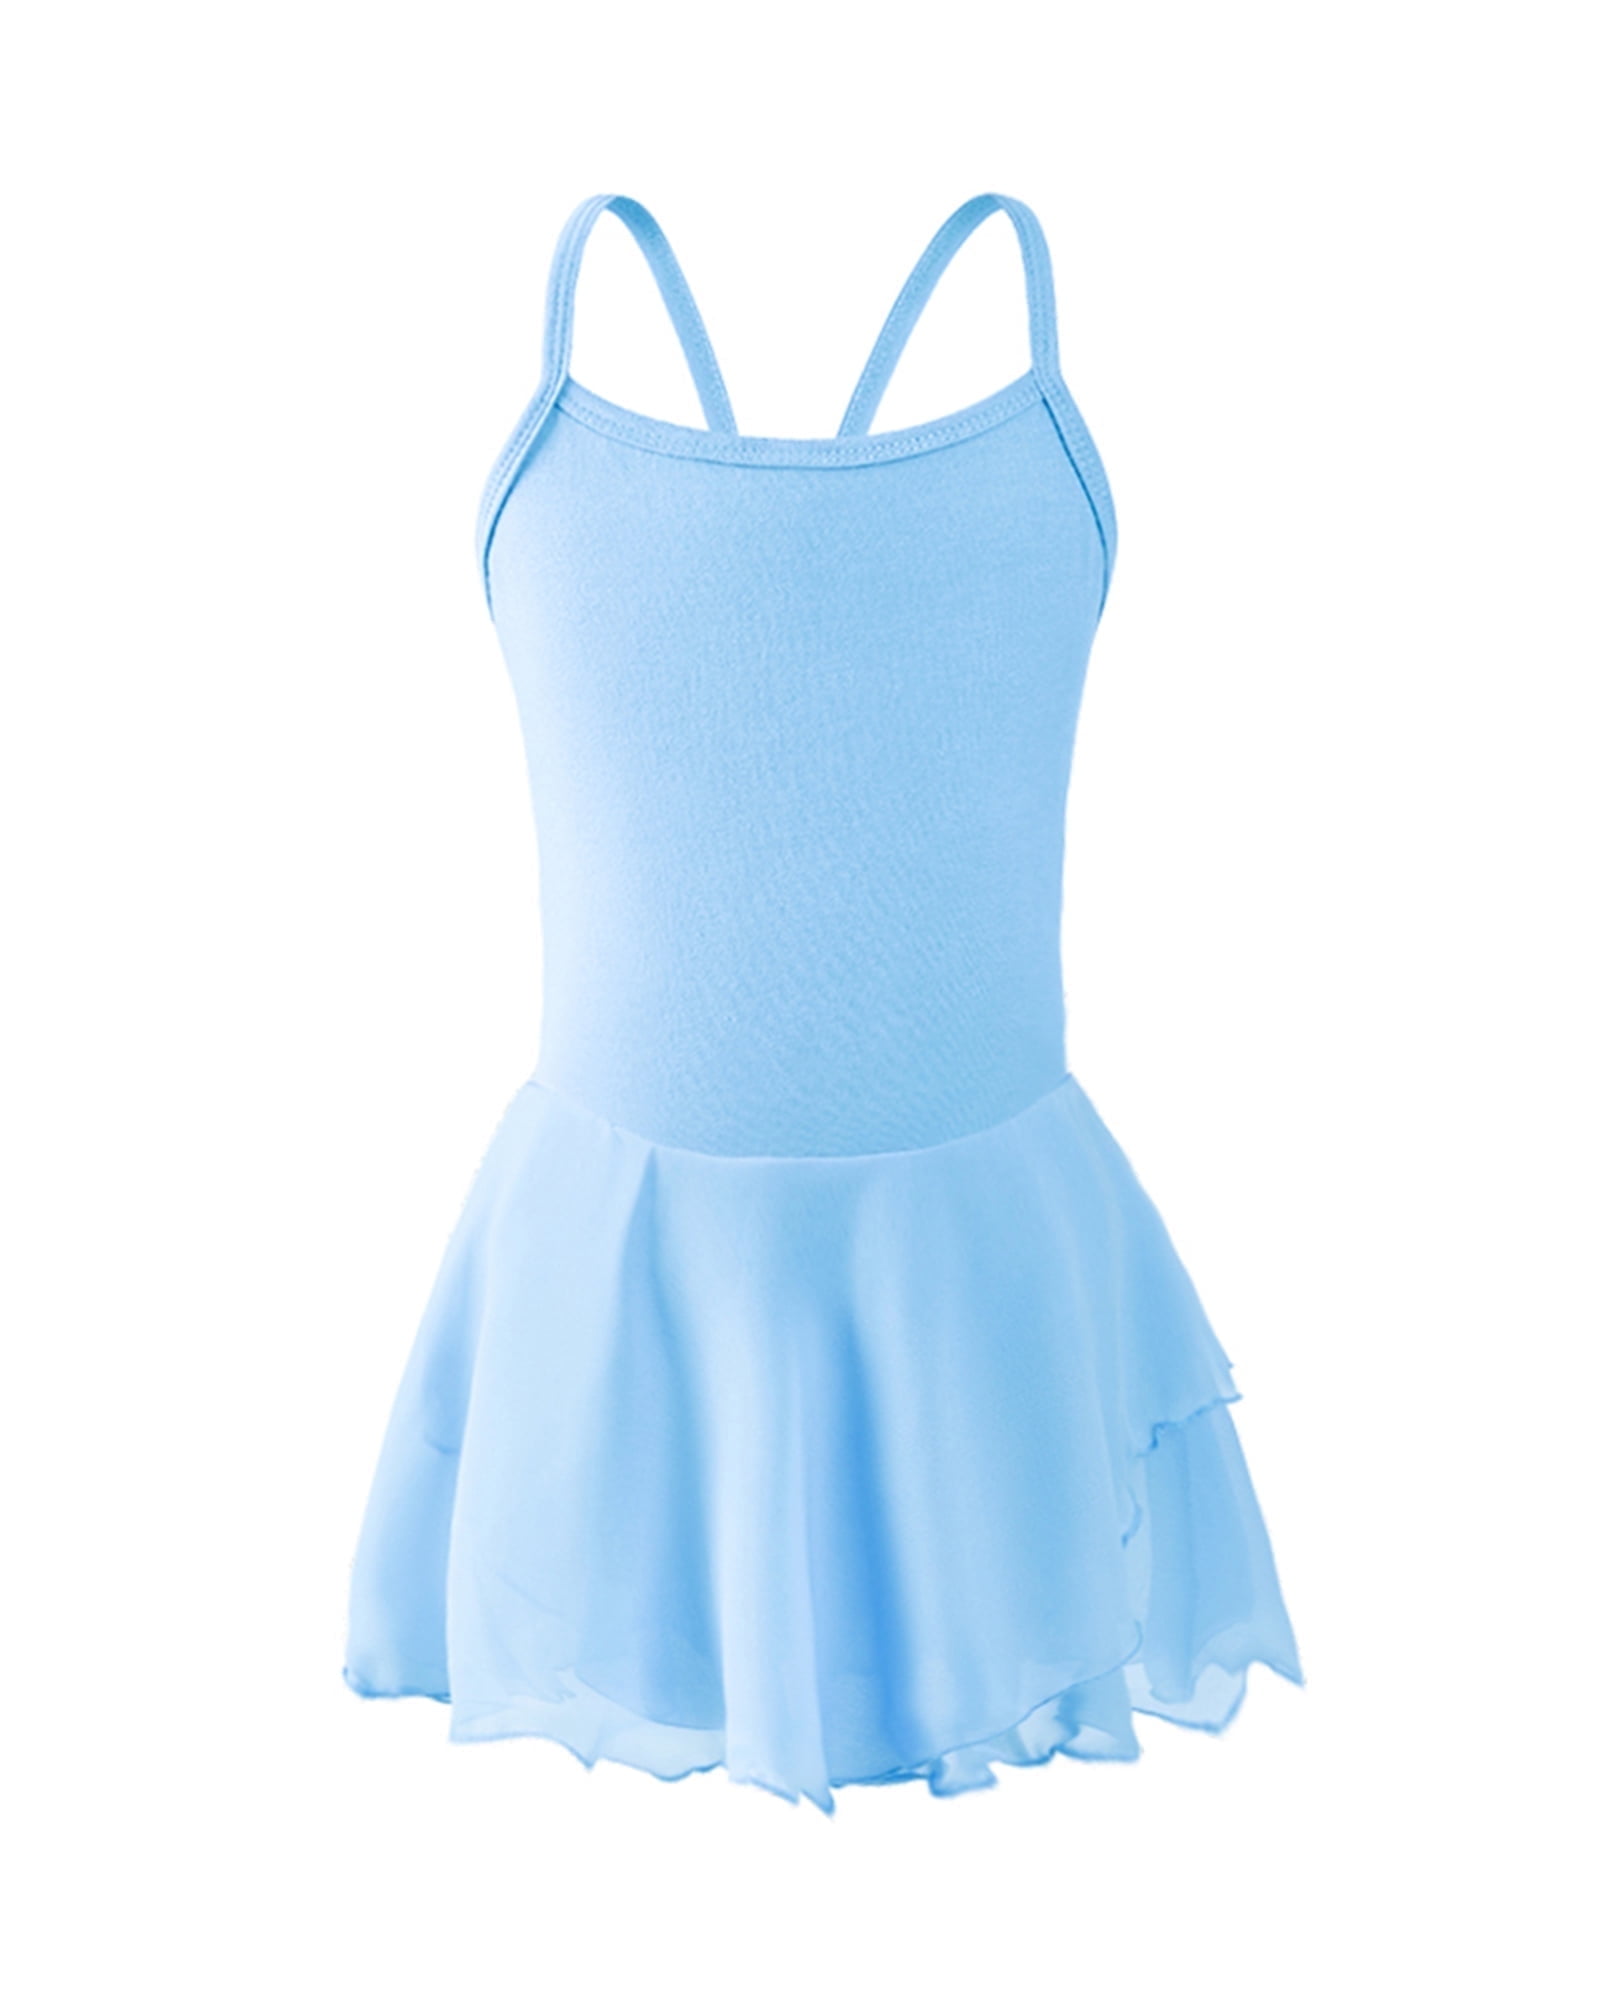 Tank Bow Dress (Baby Blue)** - Summit School of Dance & Music